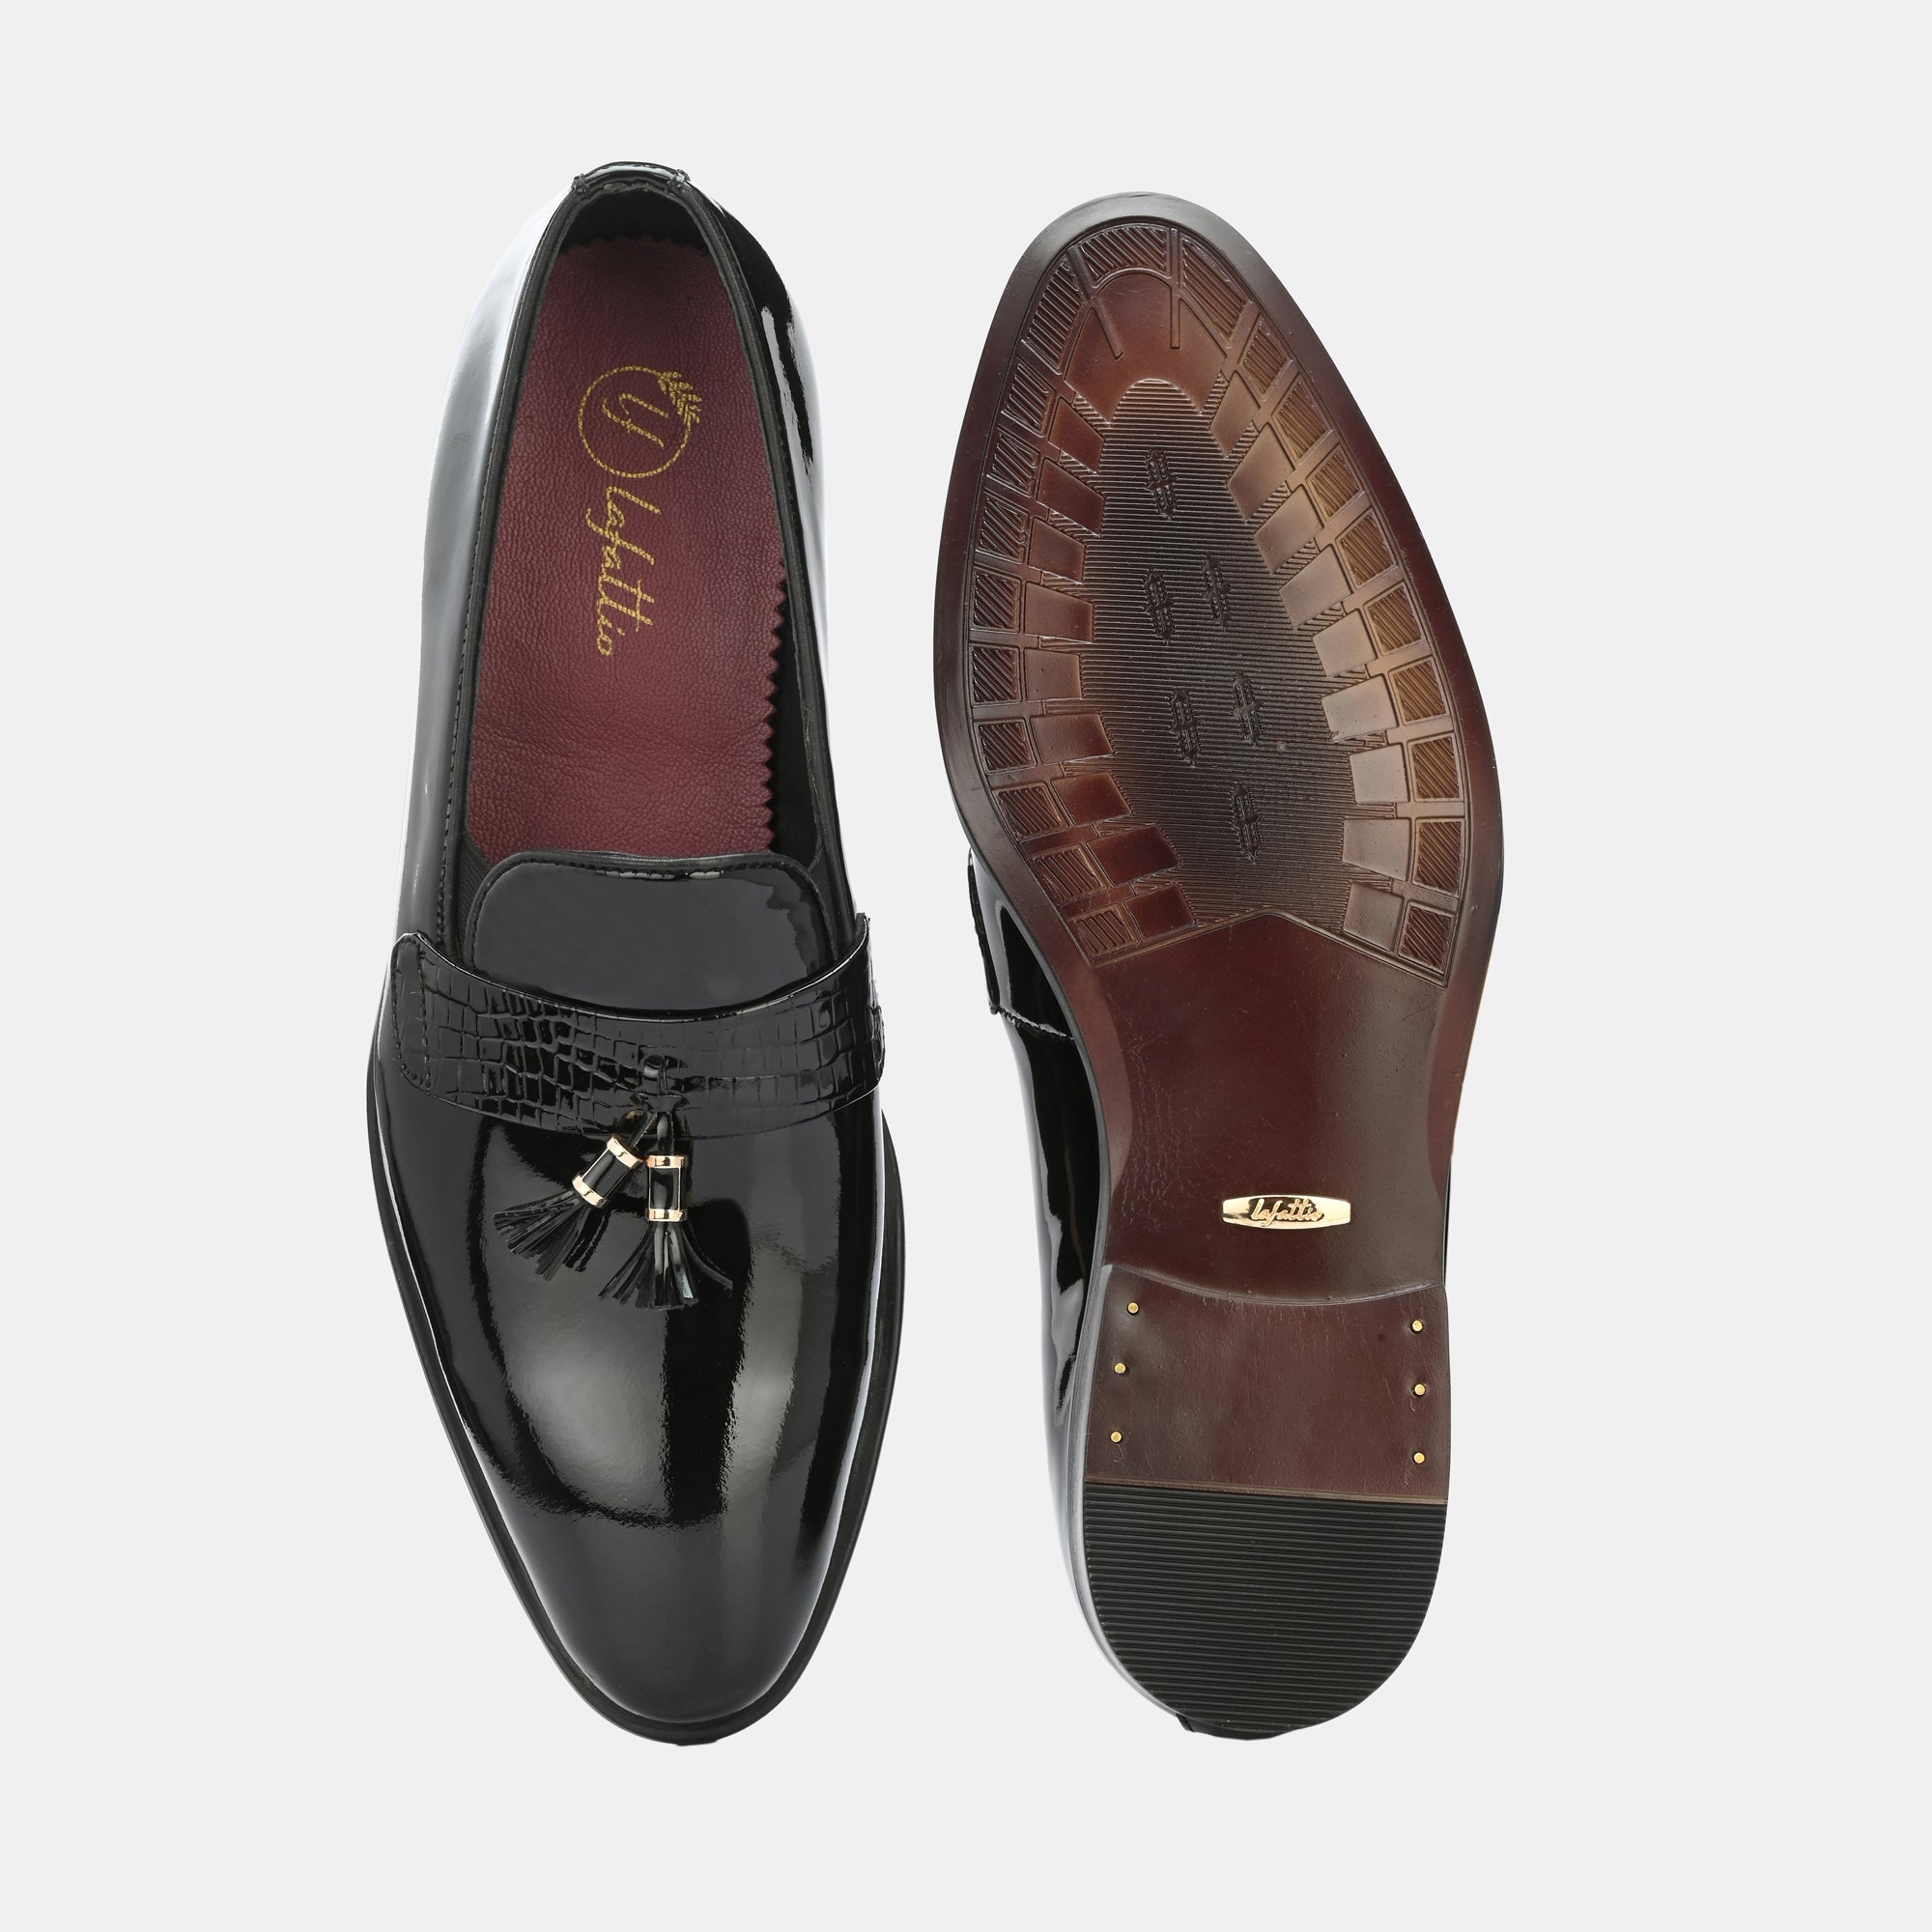 Patent Black Tassel Loafers By Lafattio